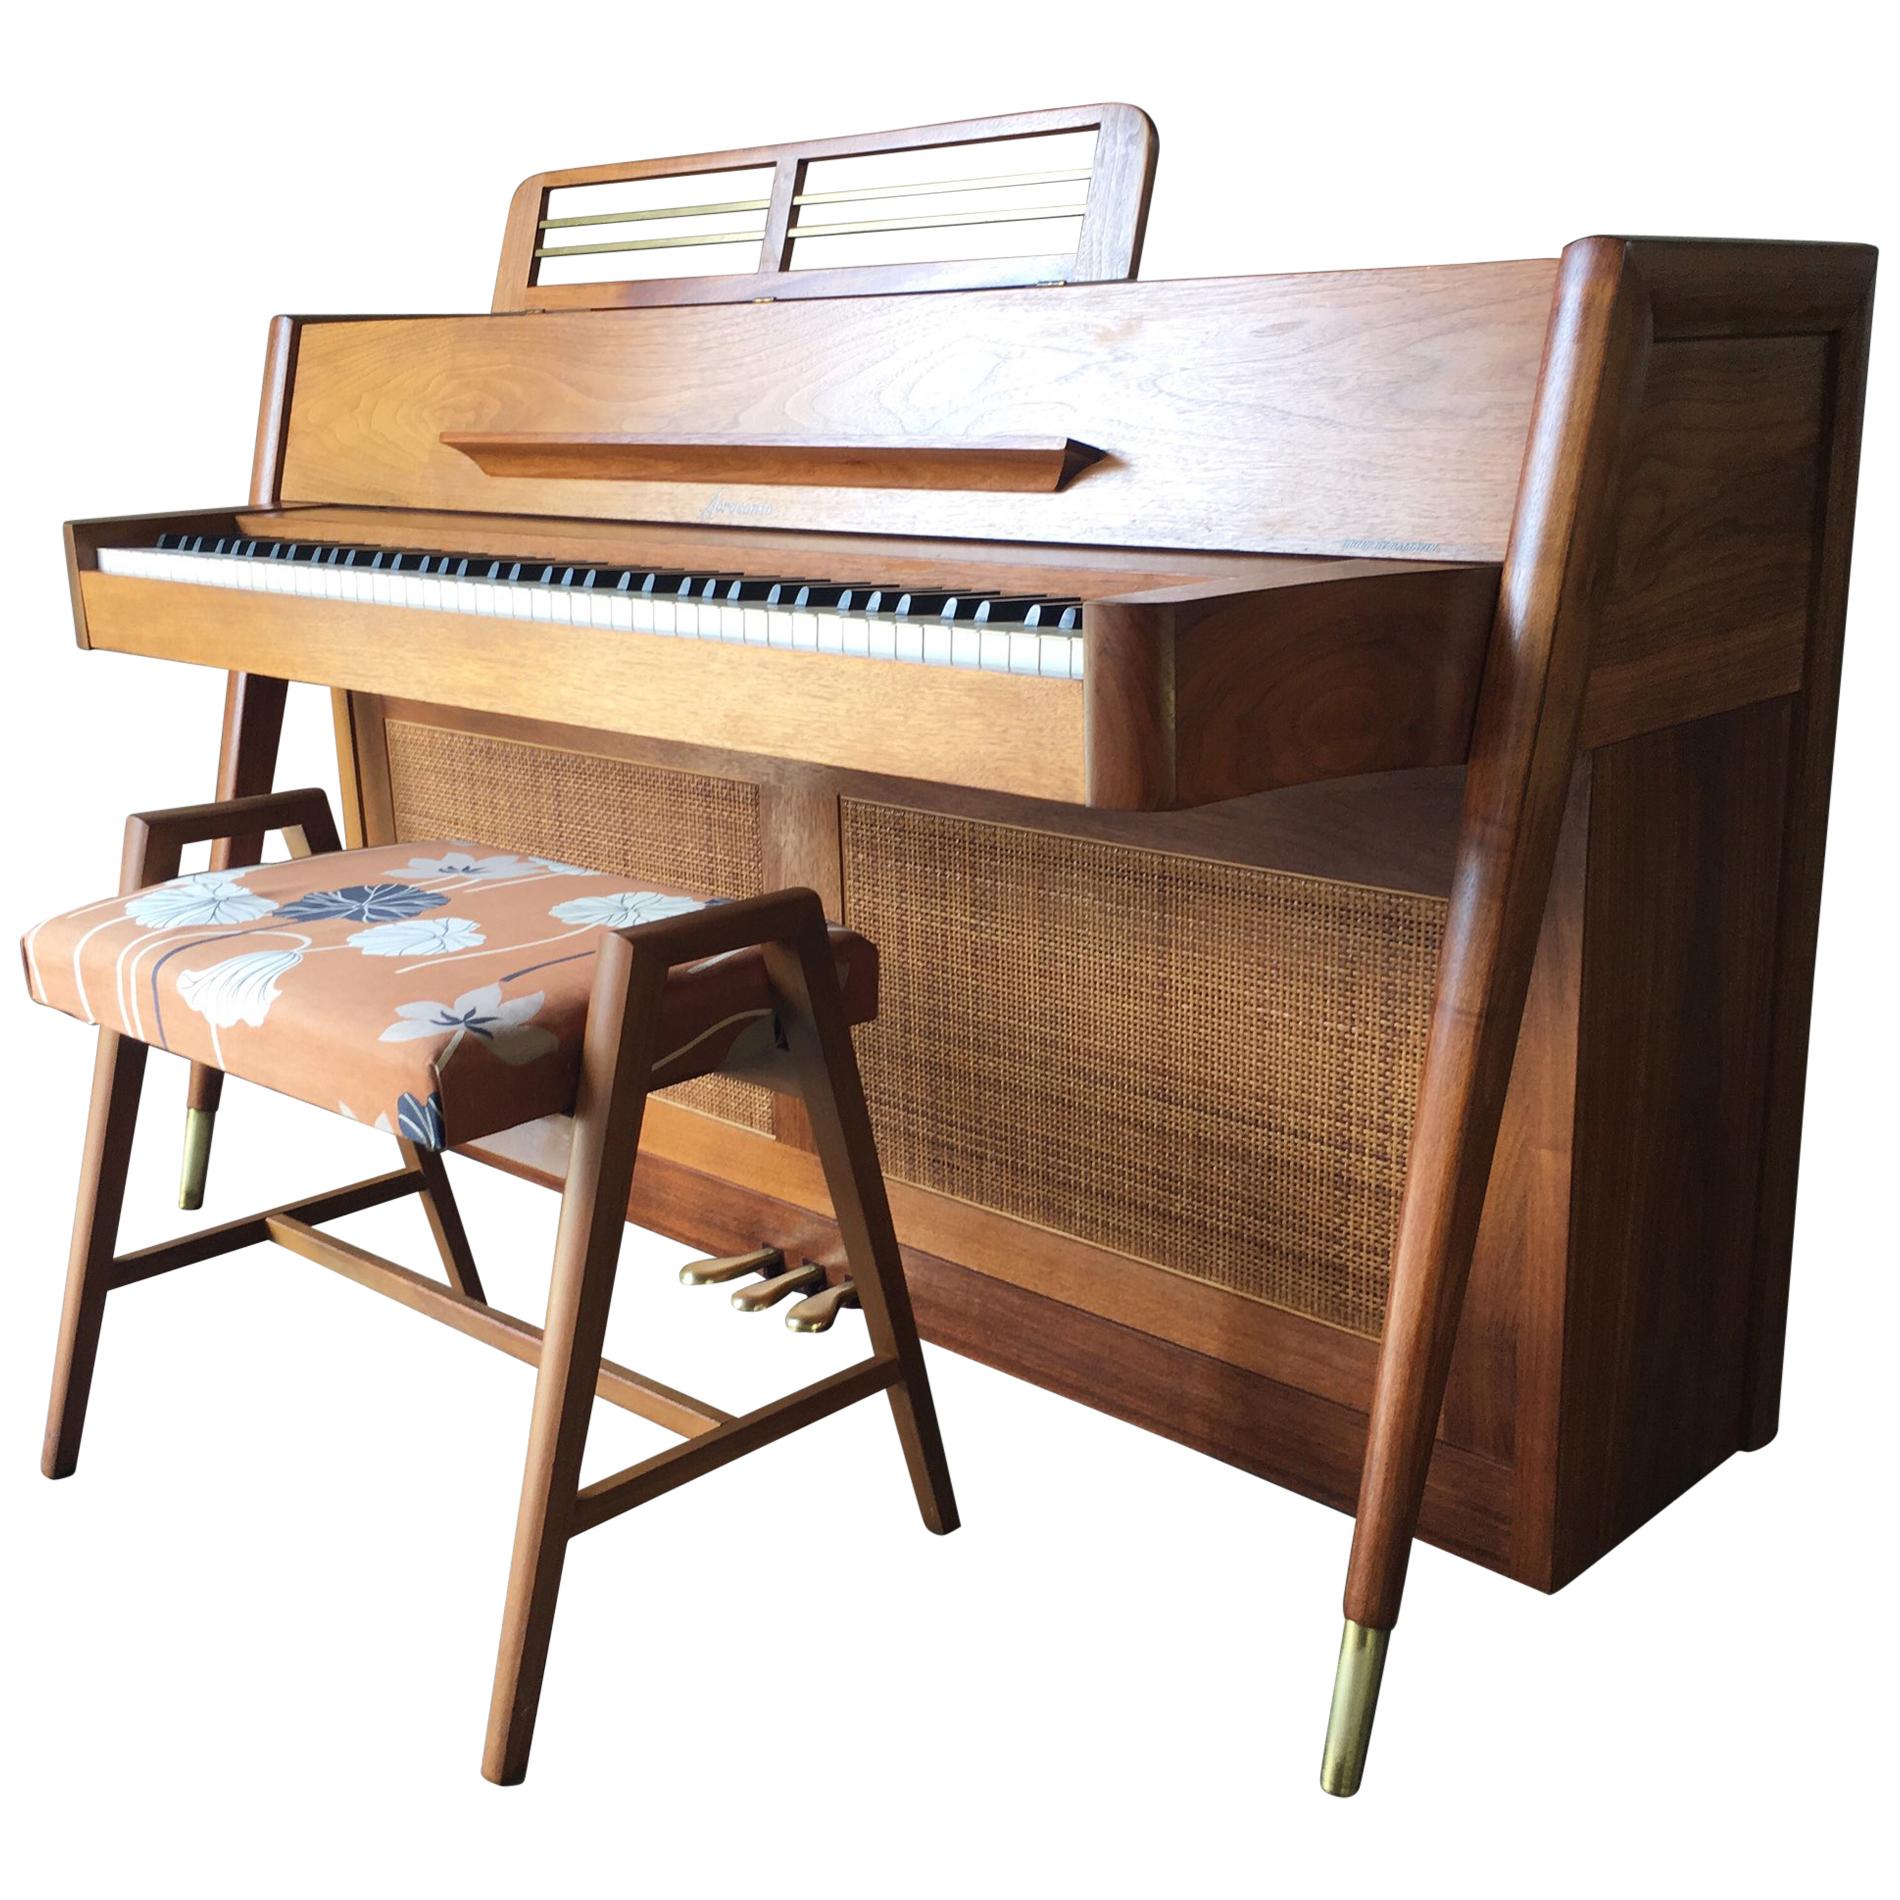 Stunning Midcentury Baldwin Acrosonic Spinet Piano with Matching Bench